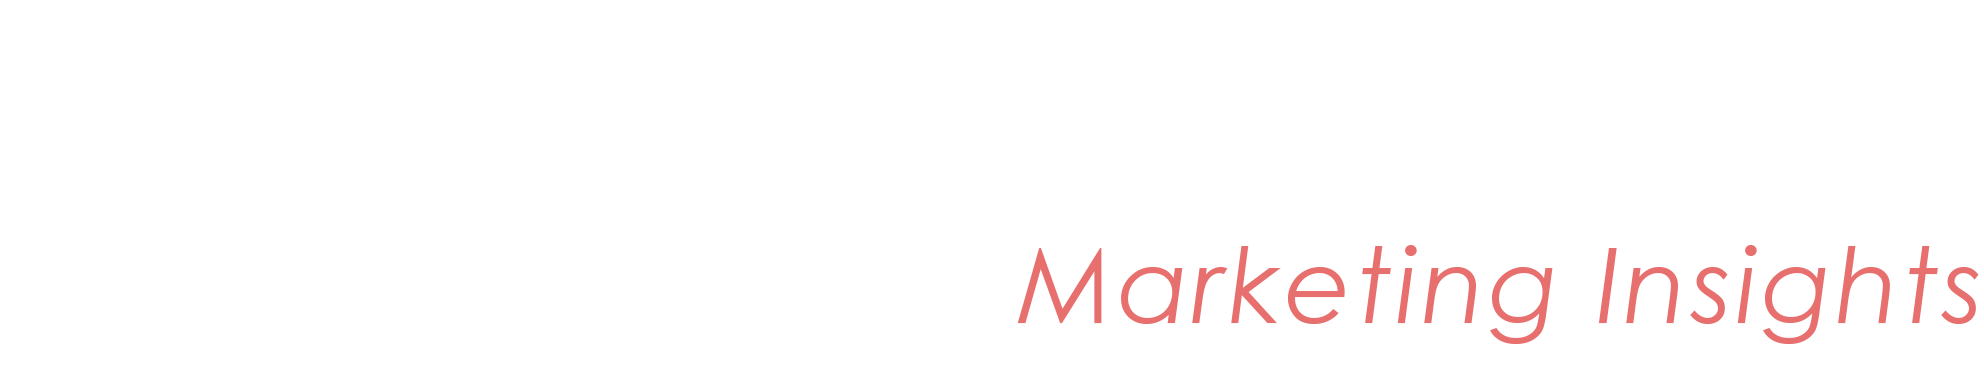 Media Group Online